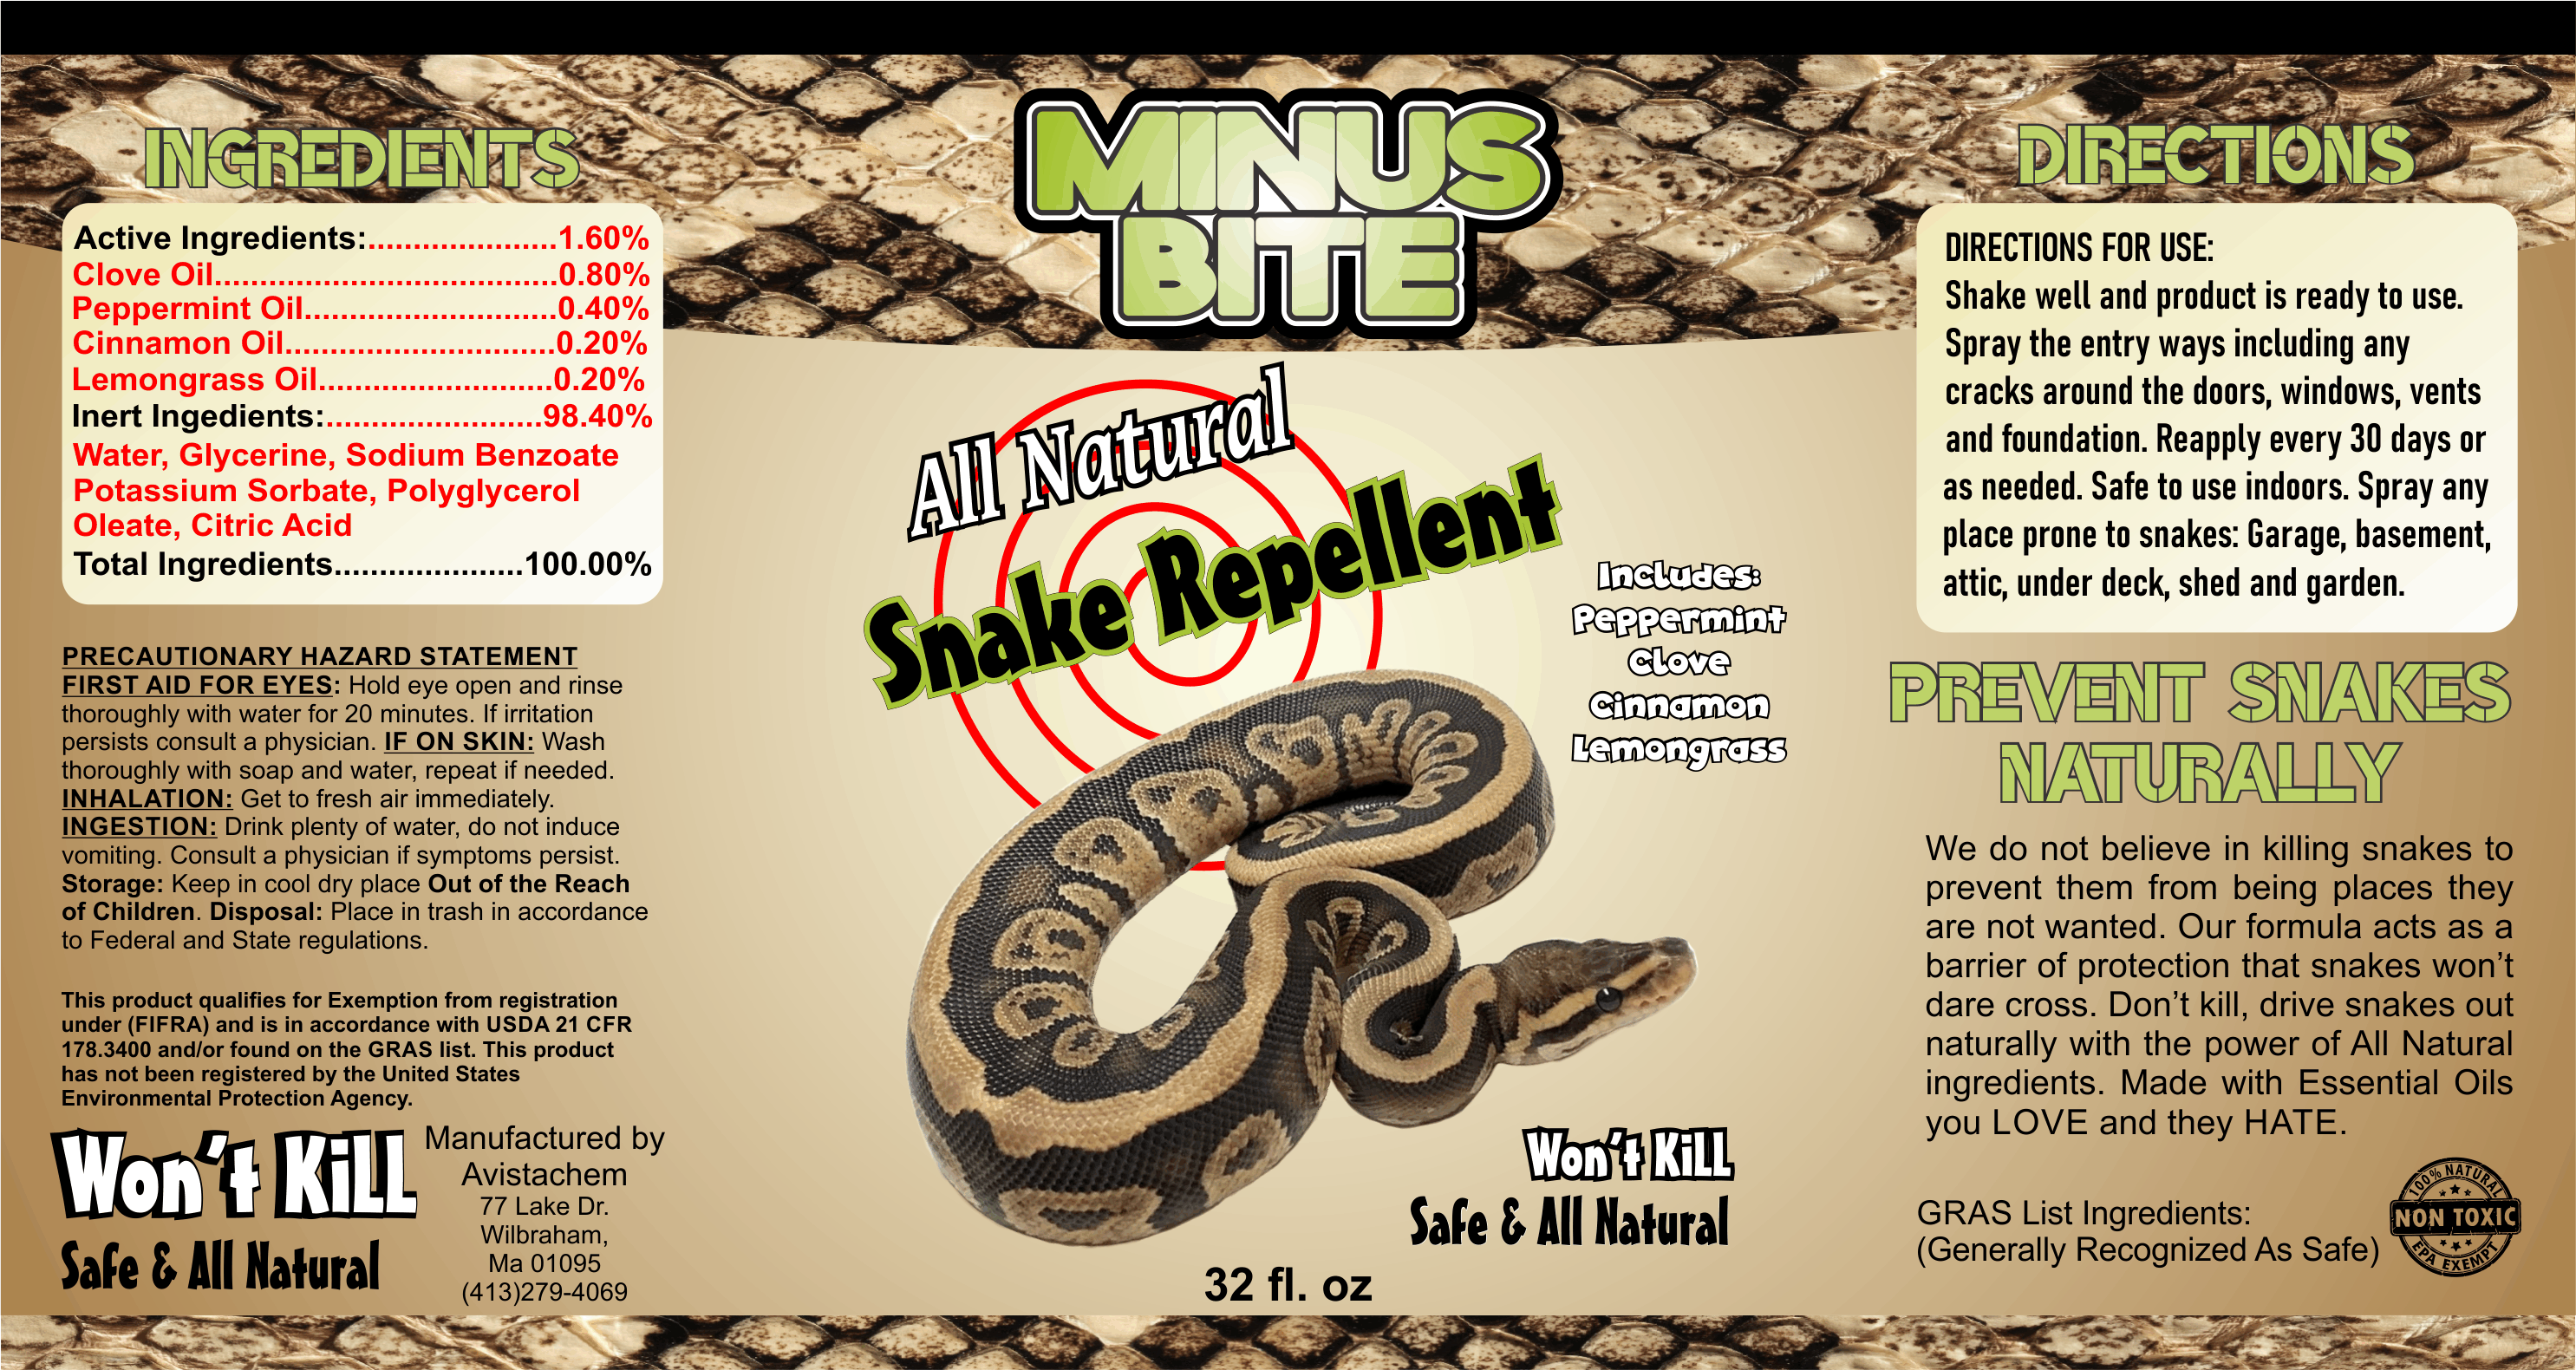 The label for Minus Bite all natural snake repellent.